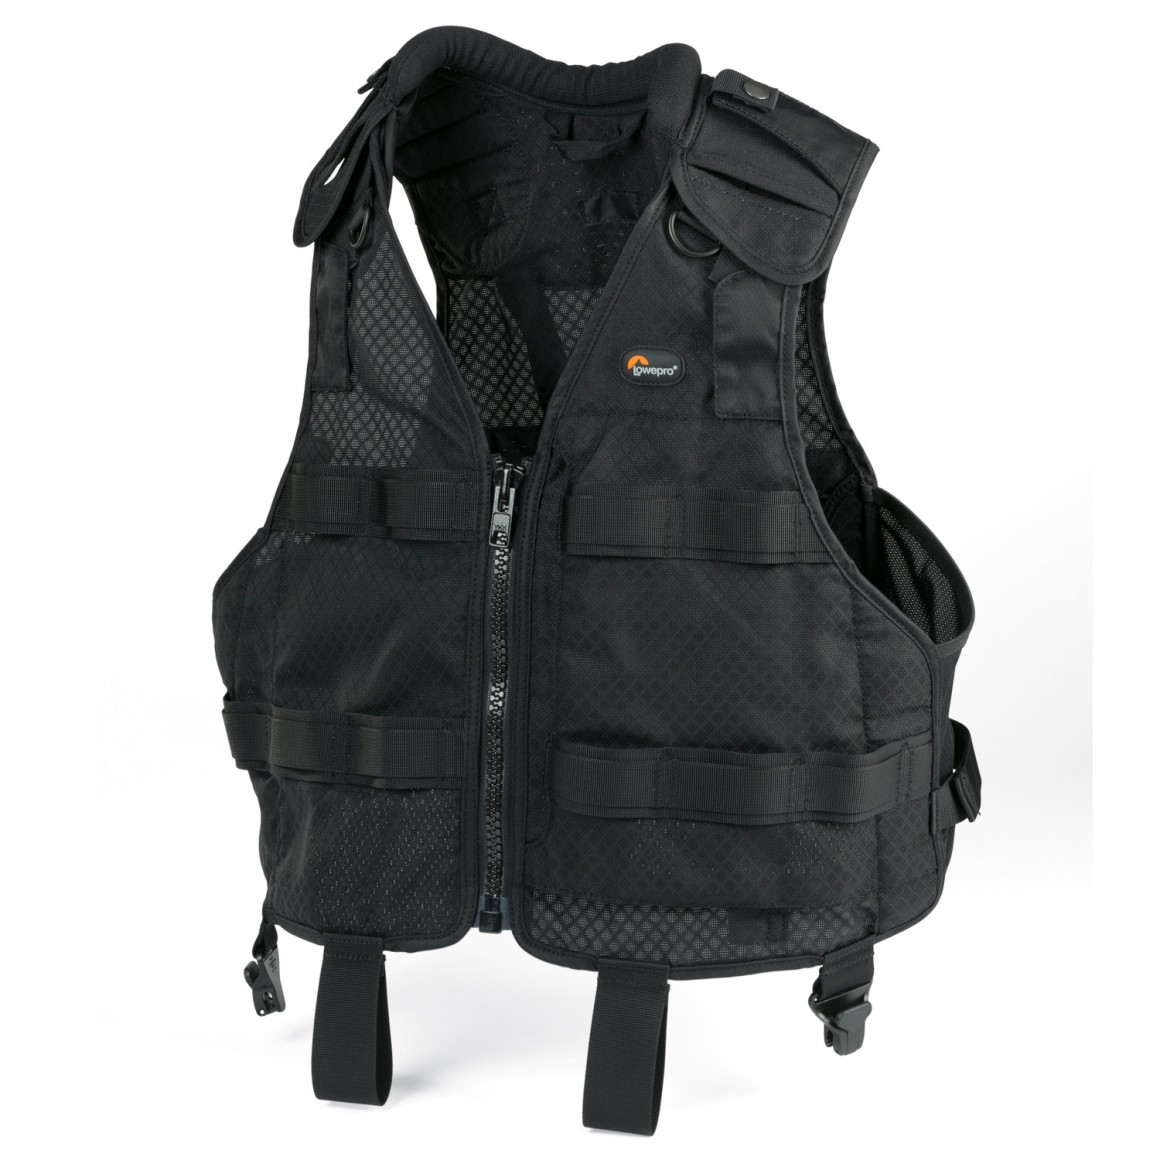 Vests купить. Фотожилет Lowepro s&f Technical Vest. Rekam Vest 14 XL фотожилет. Разгрузка Lowepro. Lowepro разгрузочный жилет.